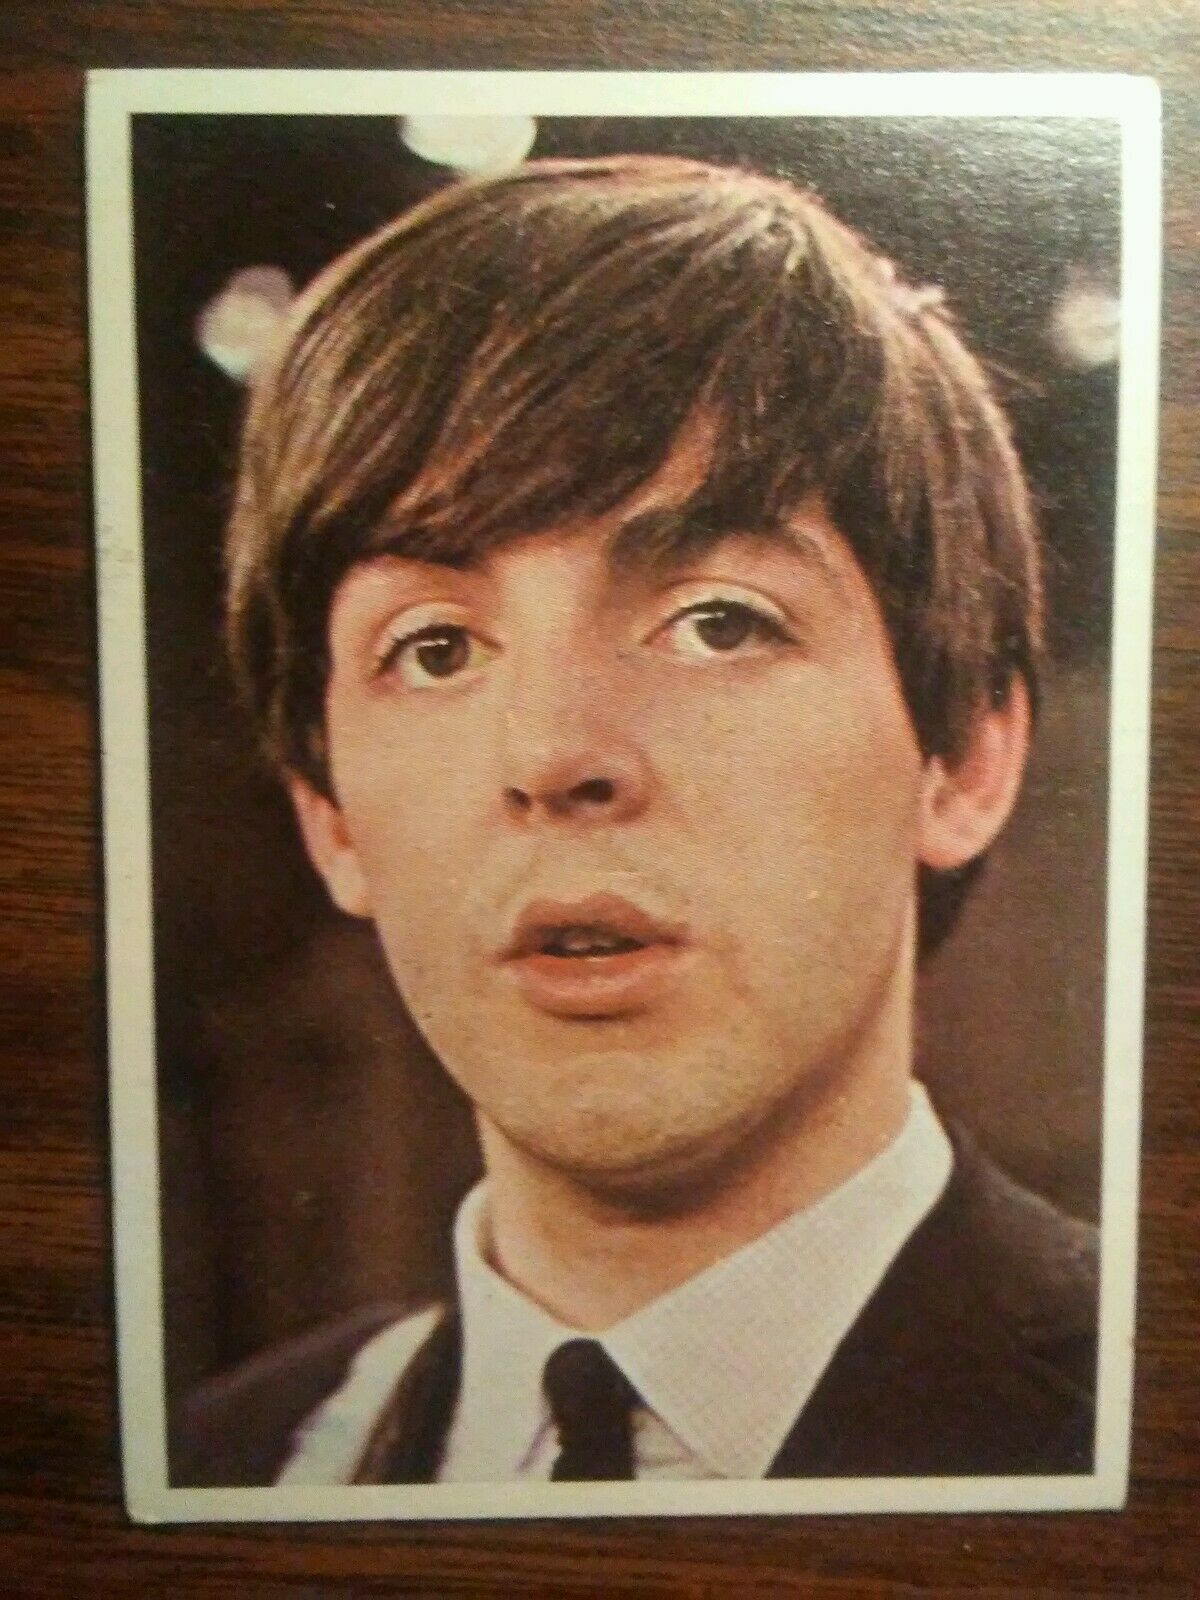 Paul The Beatles Color Trading Cards 1964 Card # 49 - Original Card